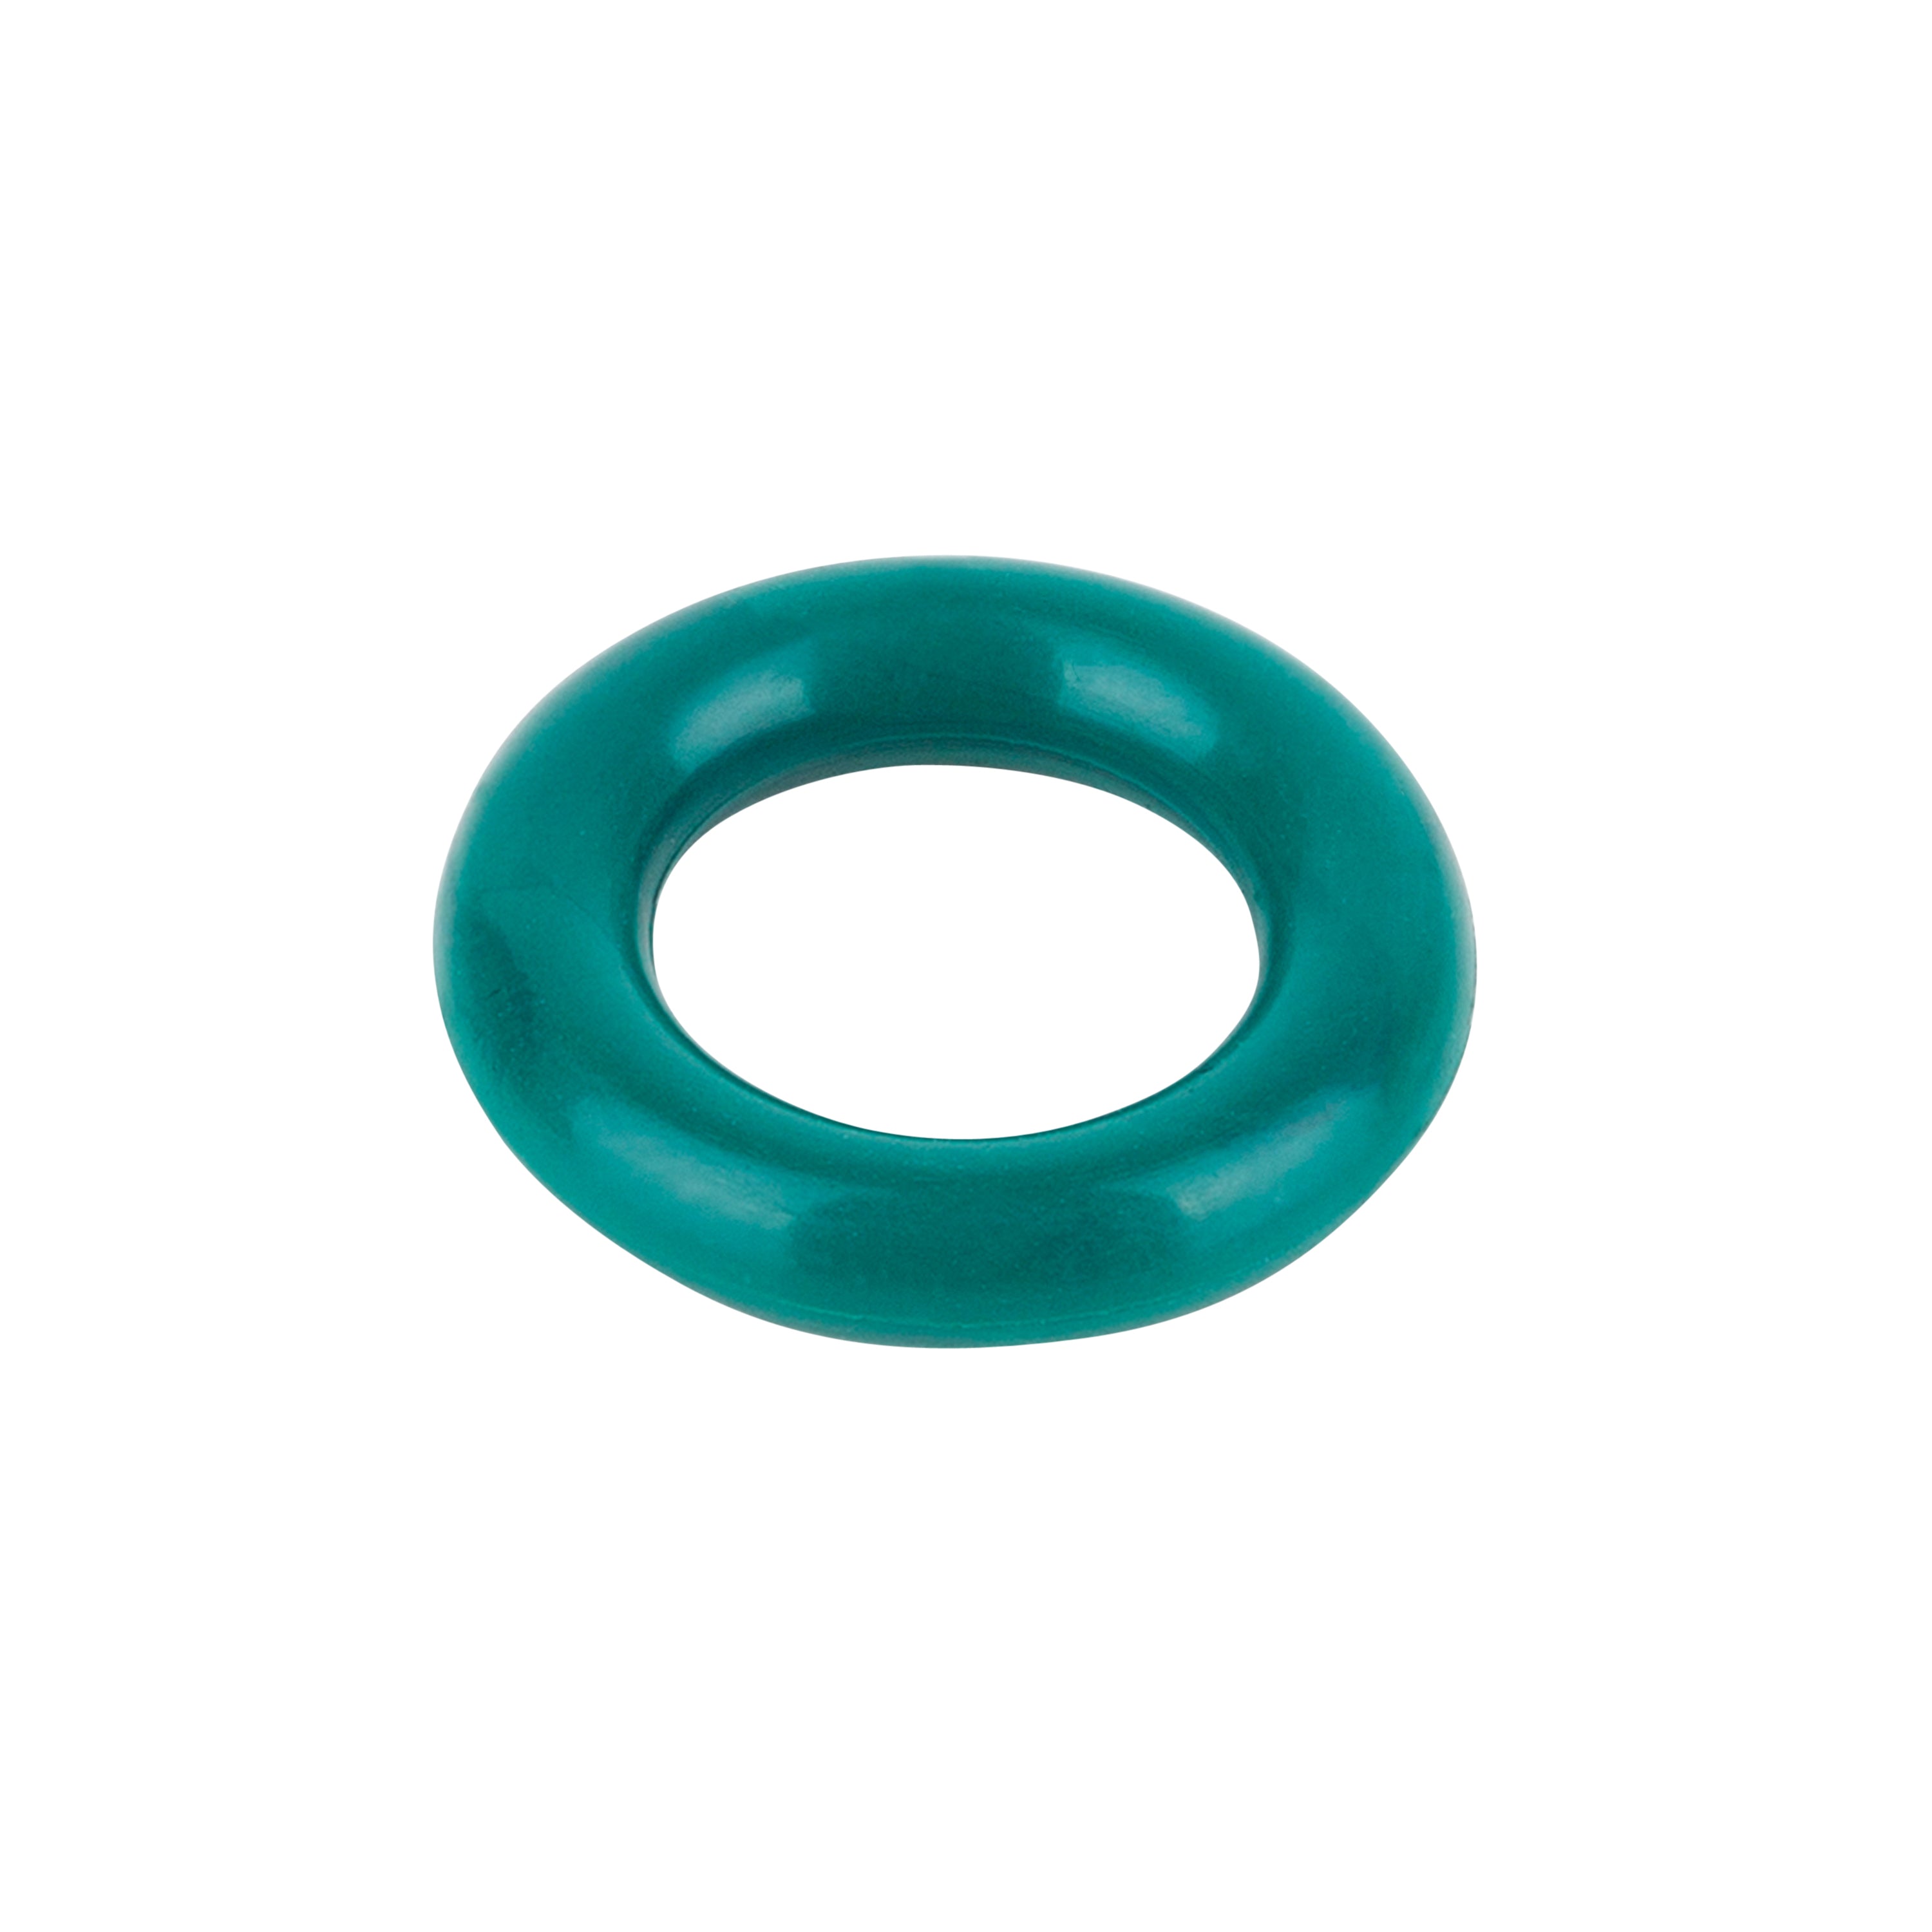 nuevoO-Ring Sortiment, 3-50 mm 419-pcs. sellosringe Gummiselloen Gummiring,  14,39 €